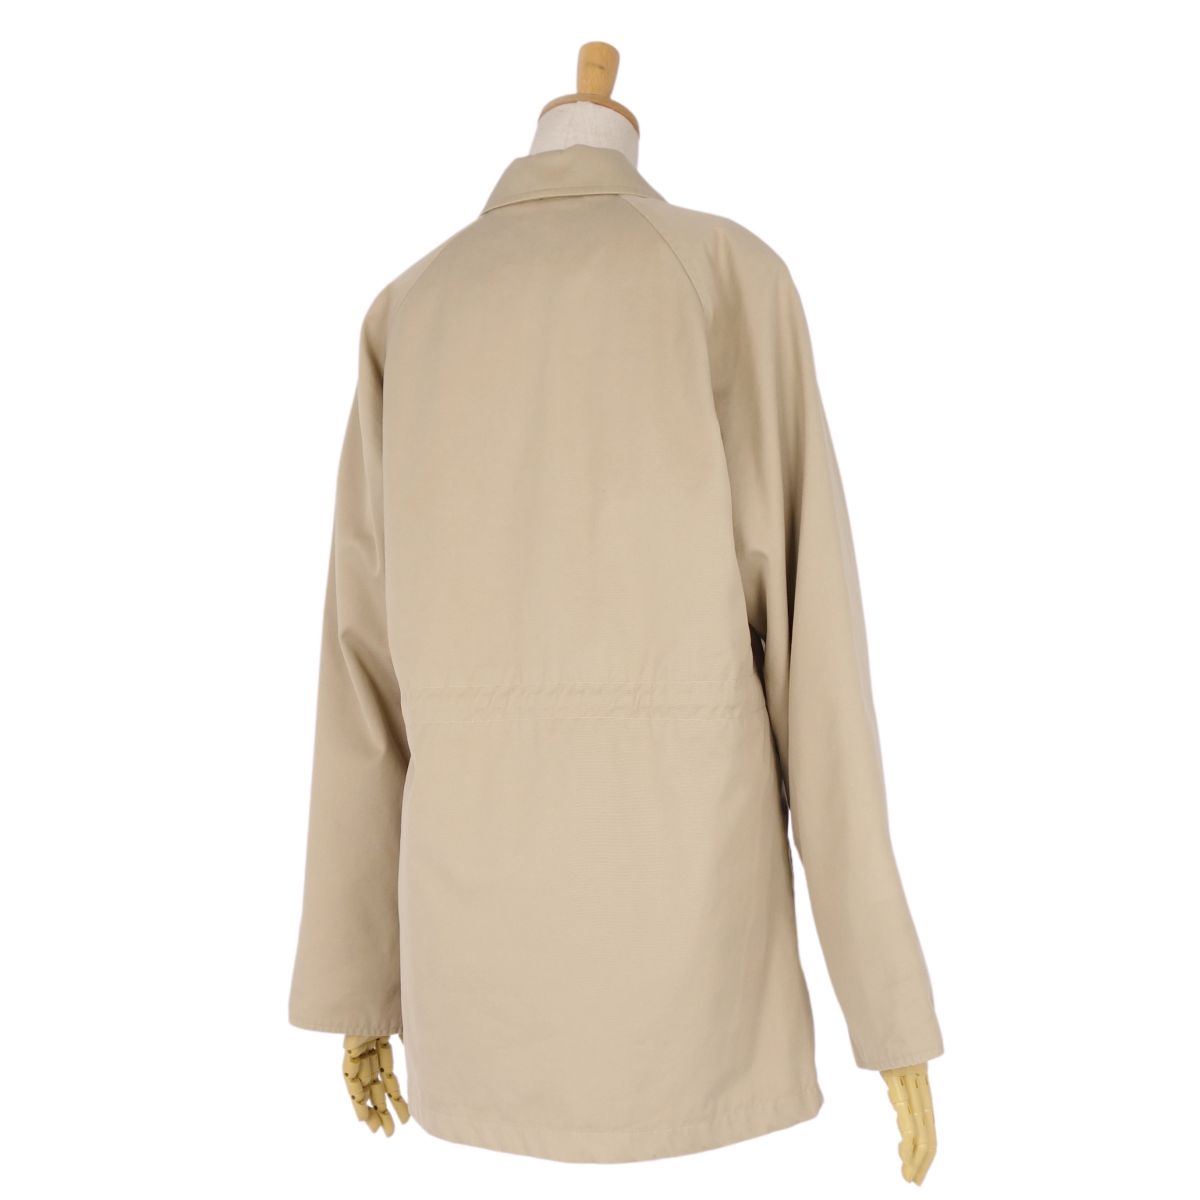 Vint Burberry s Coat One Handle Stainless Colour Coat Balmacorn Coat Back Check UK Made   6 (S equivalent) Beige - FODMEST